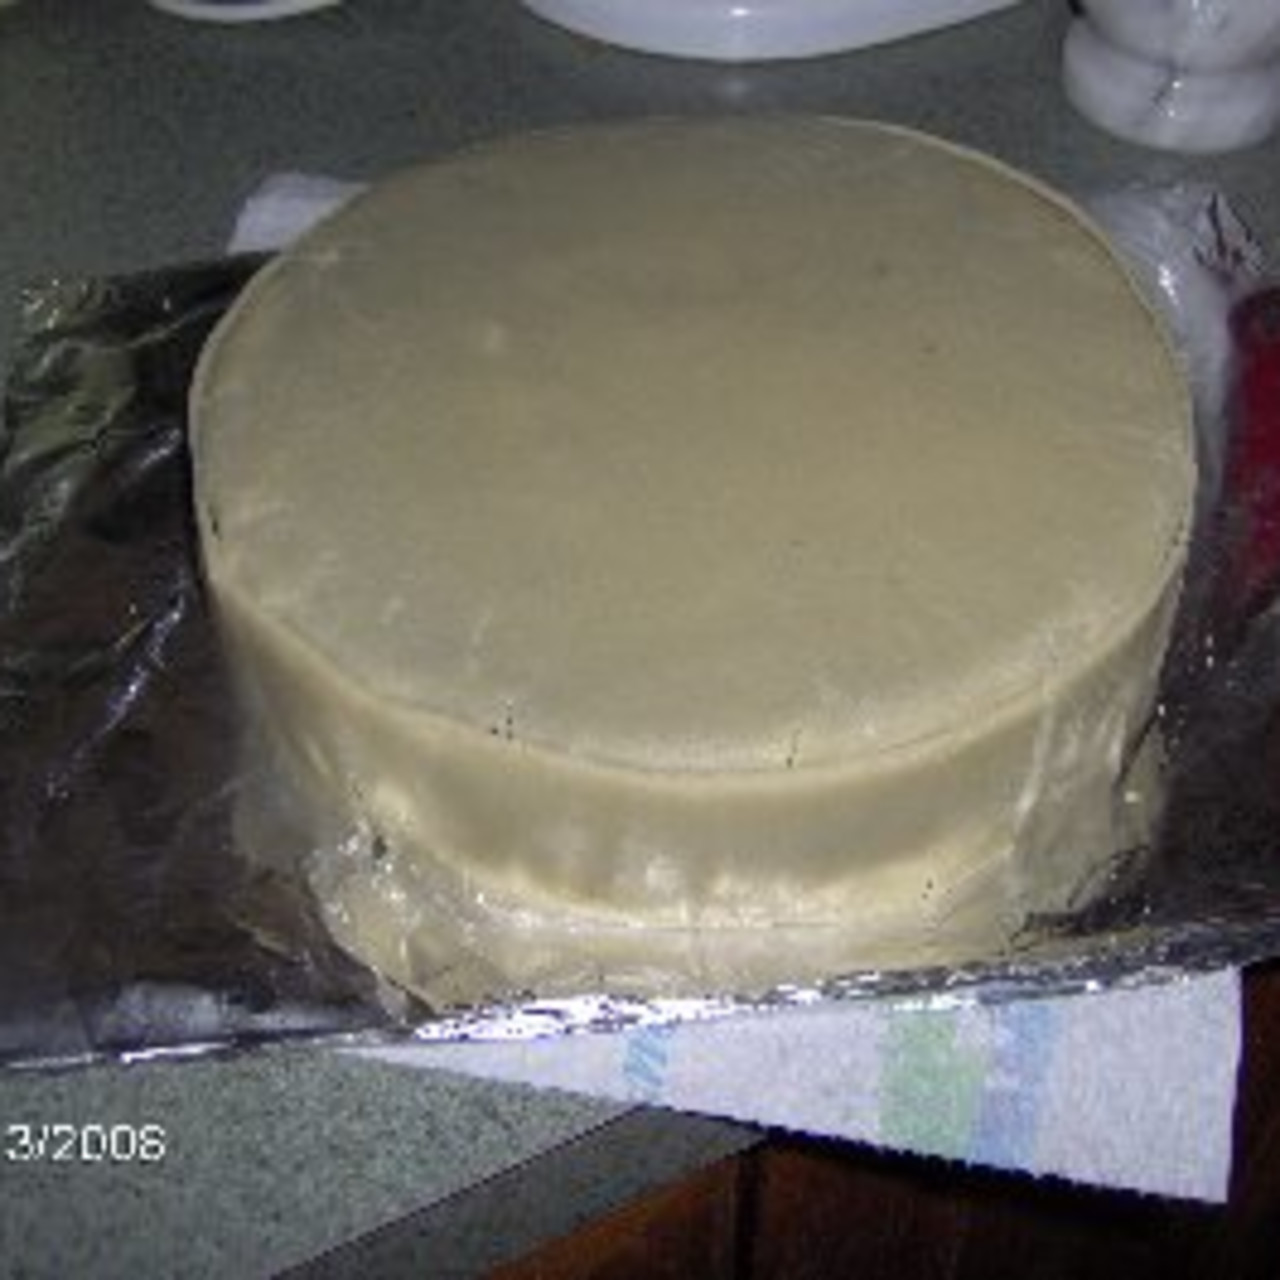 Simnel cake - Wikipedia